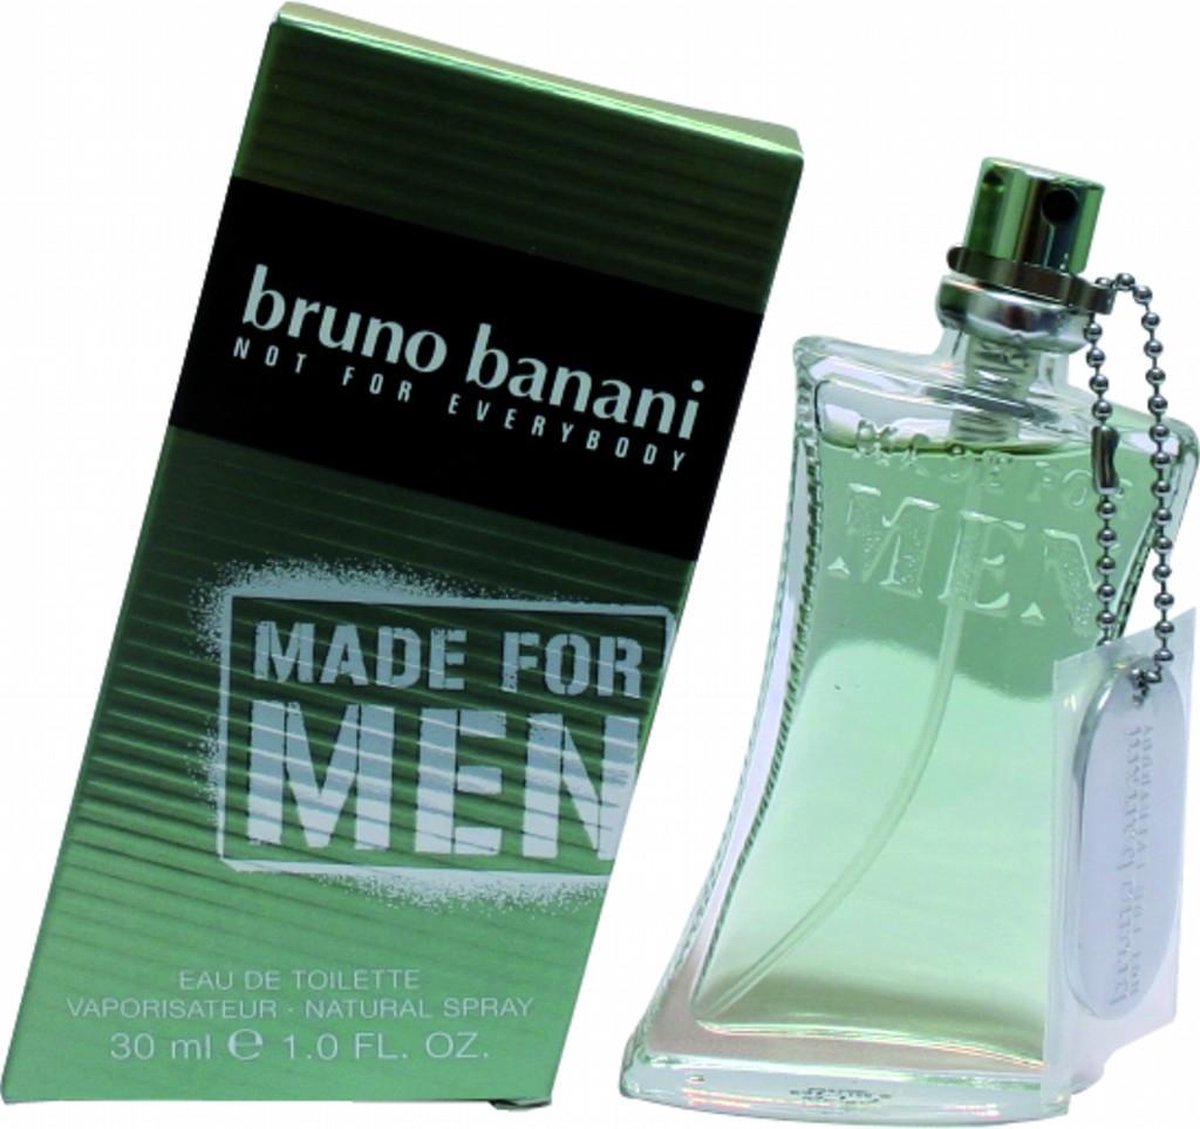 Bruno Banani Made for Men - 30 ml - Eau de toilette